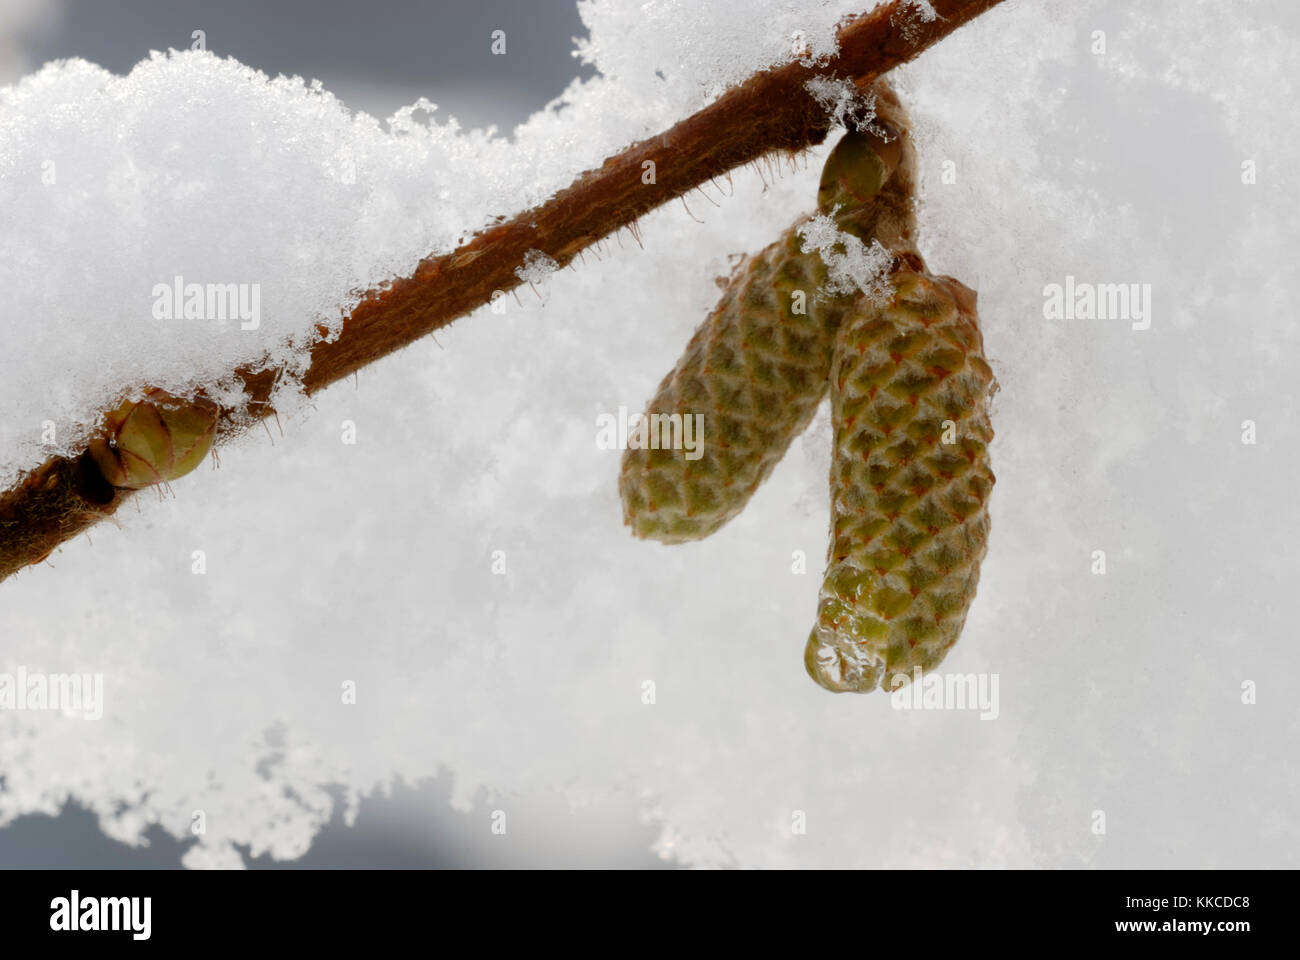 Young catkins of Hazel, Corylus avellana in snow, Wales, UK. Stock Photo